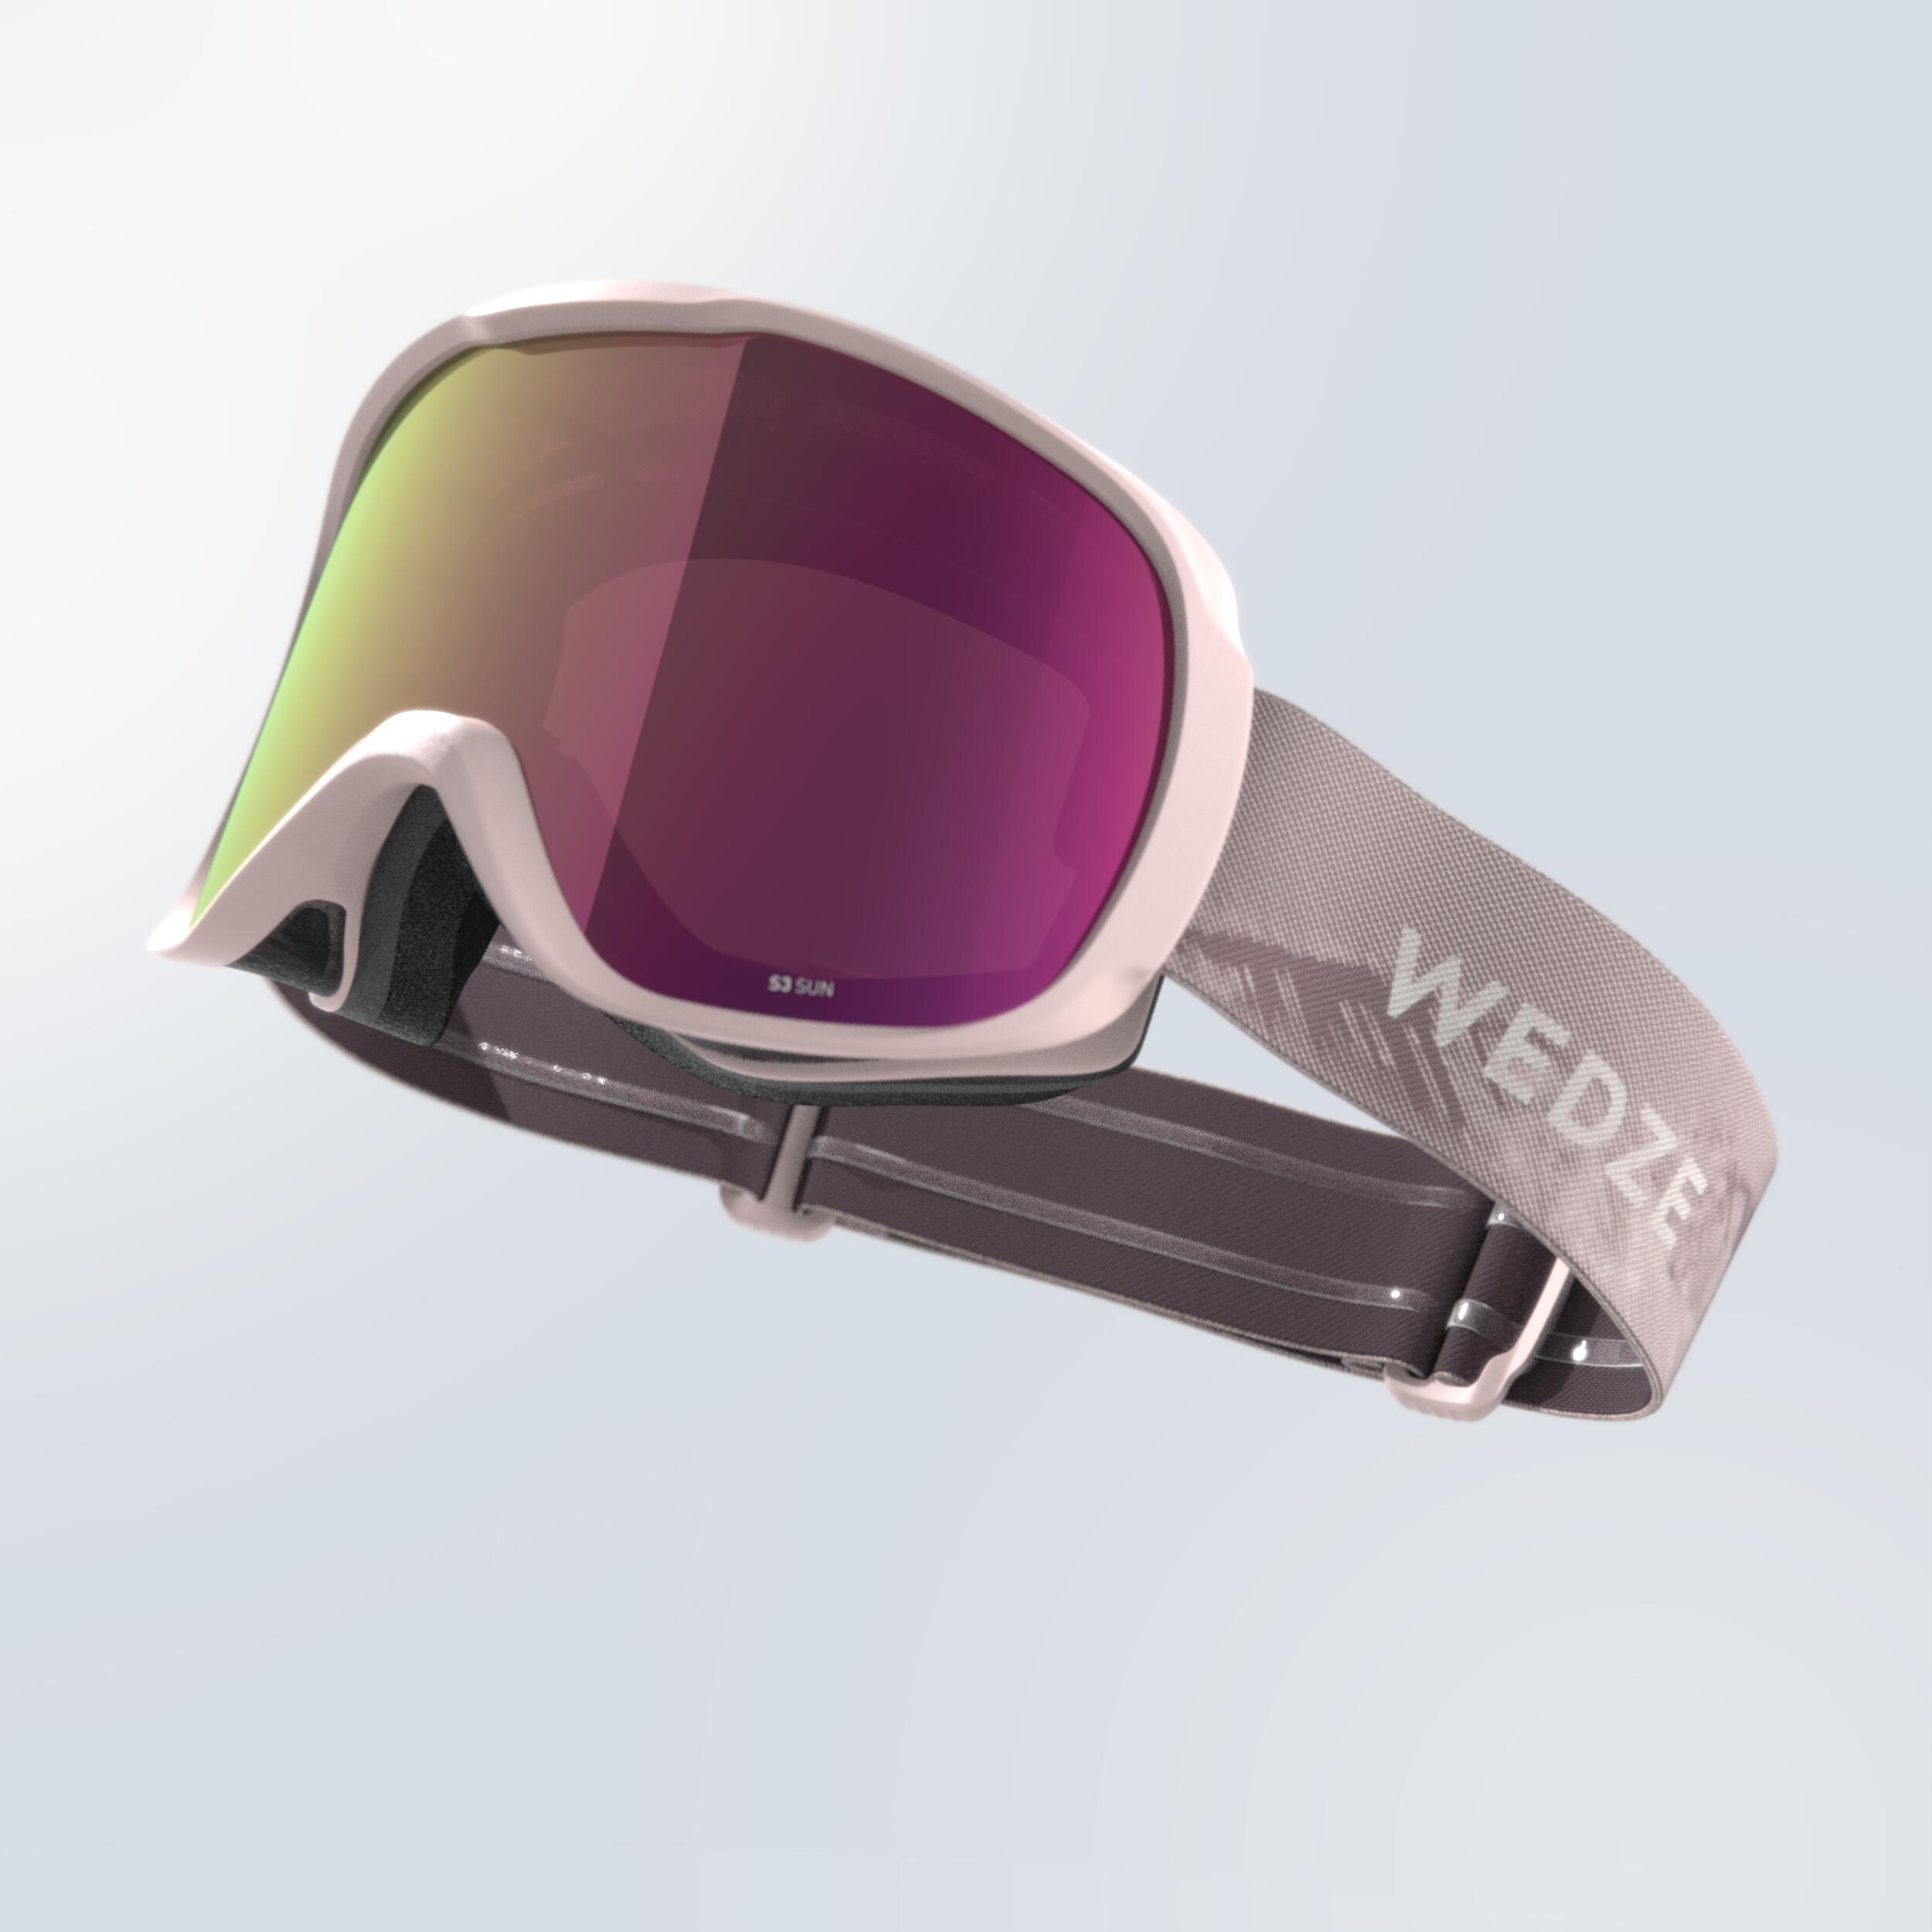 Ochelari schi/snowboard G 500 S3 Vreme Frumoasă Roz Copii/Adulți 500